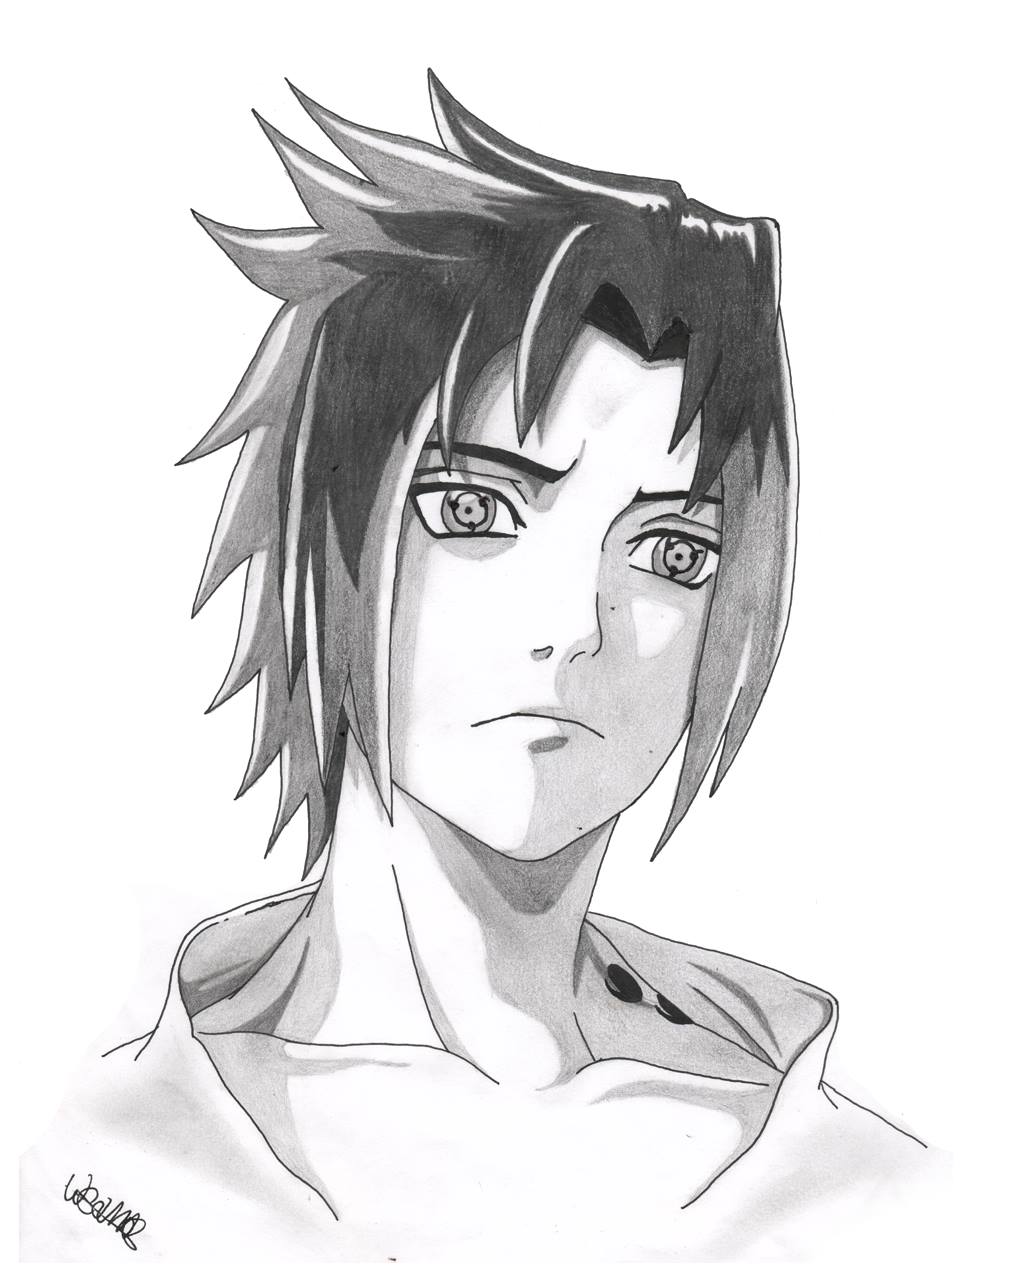 Naruto Shippuden - Uchiha Sasuke by WermaC on DeviantArt